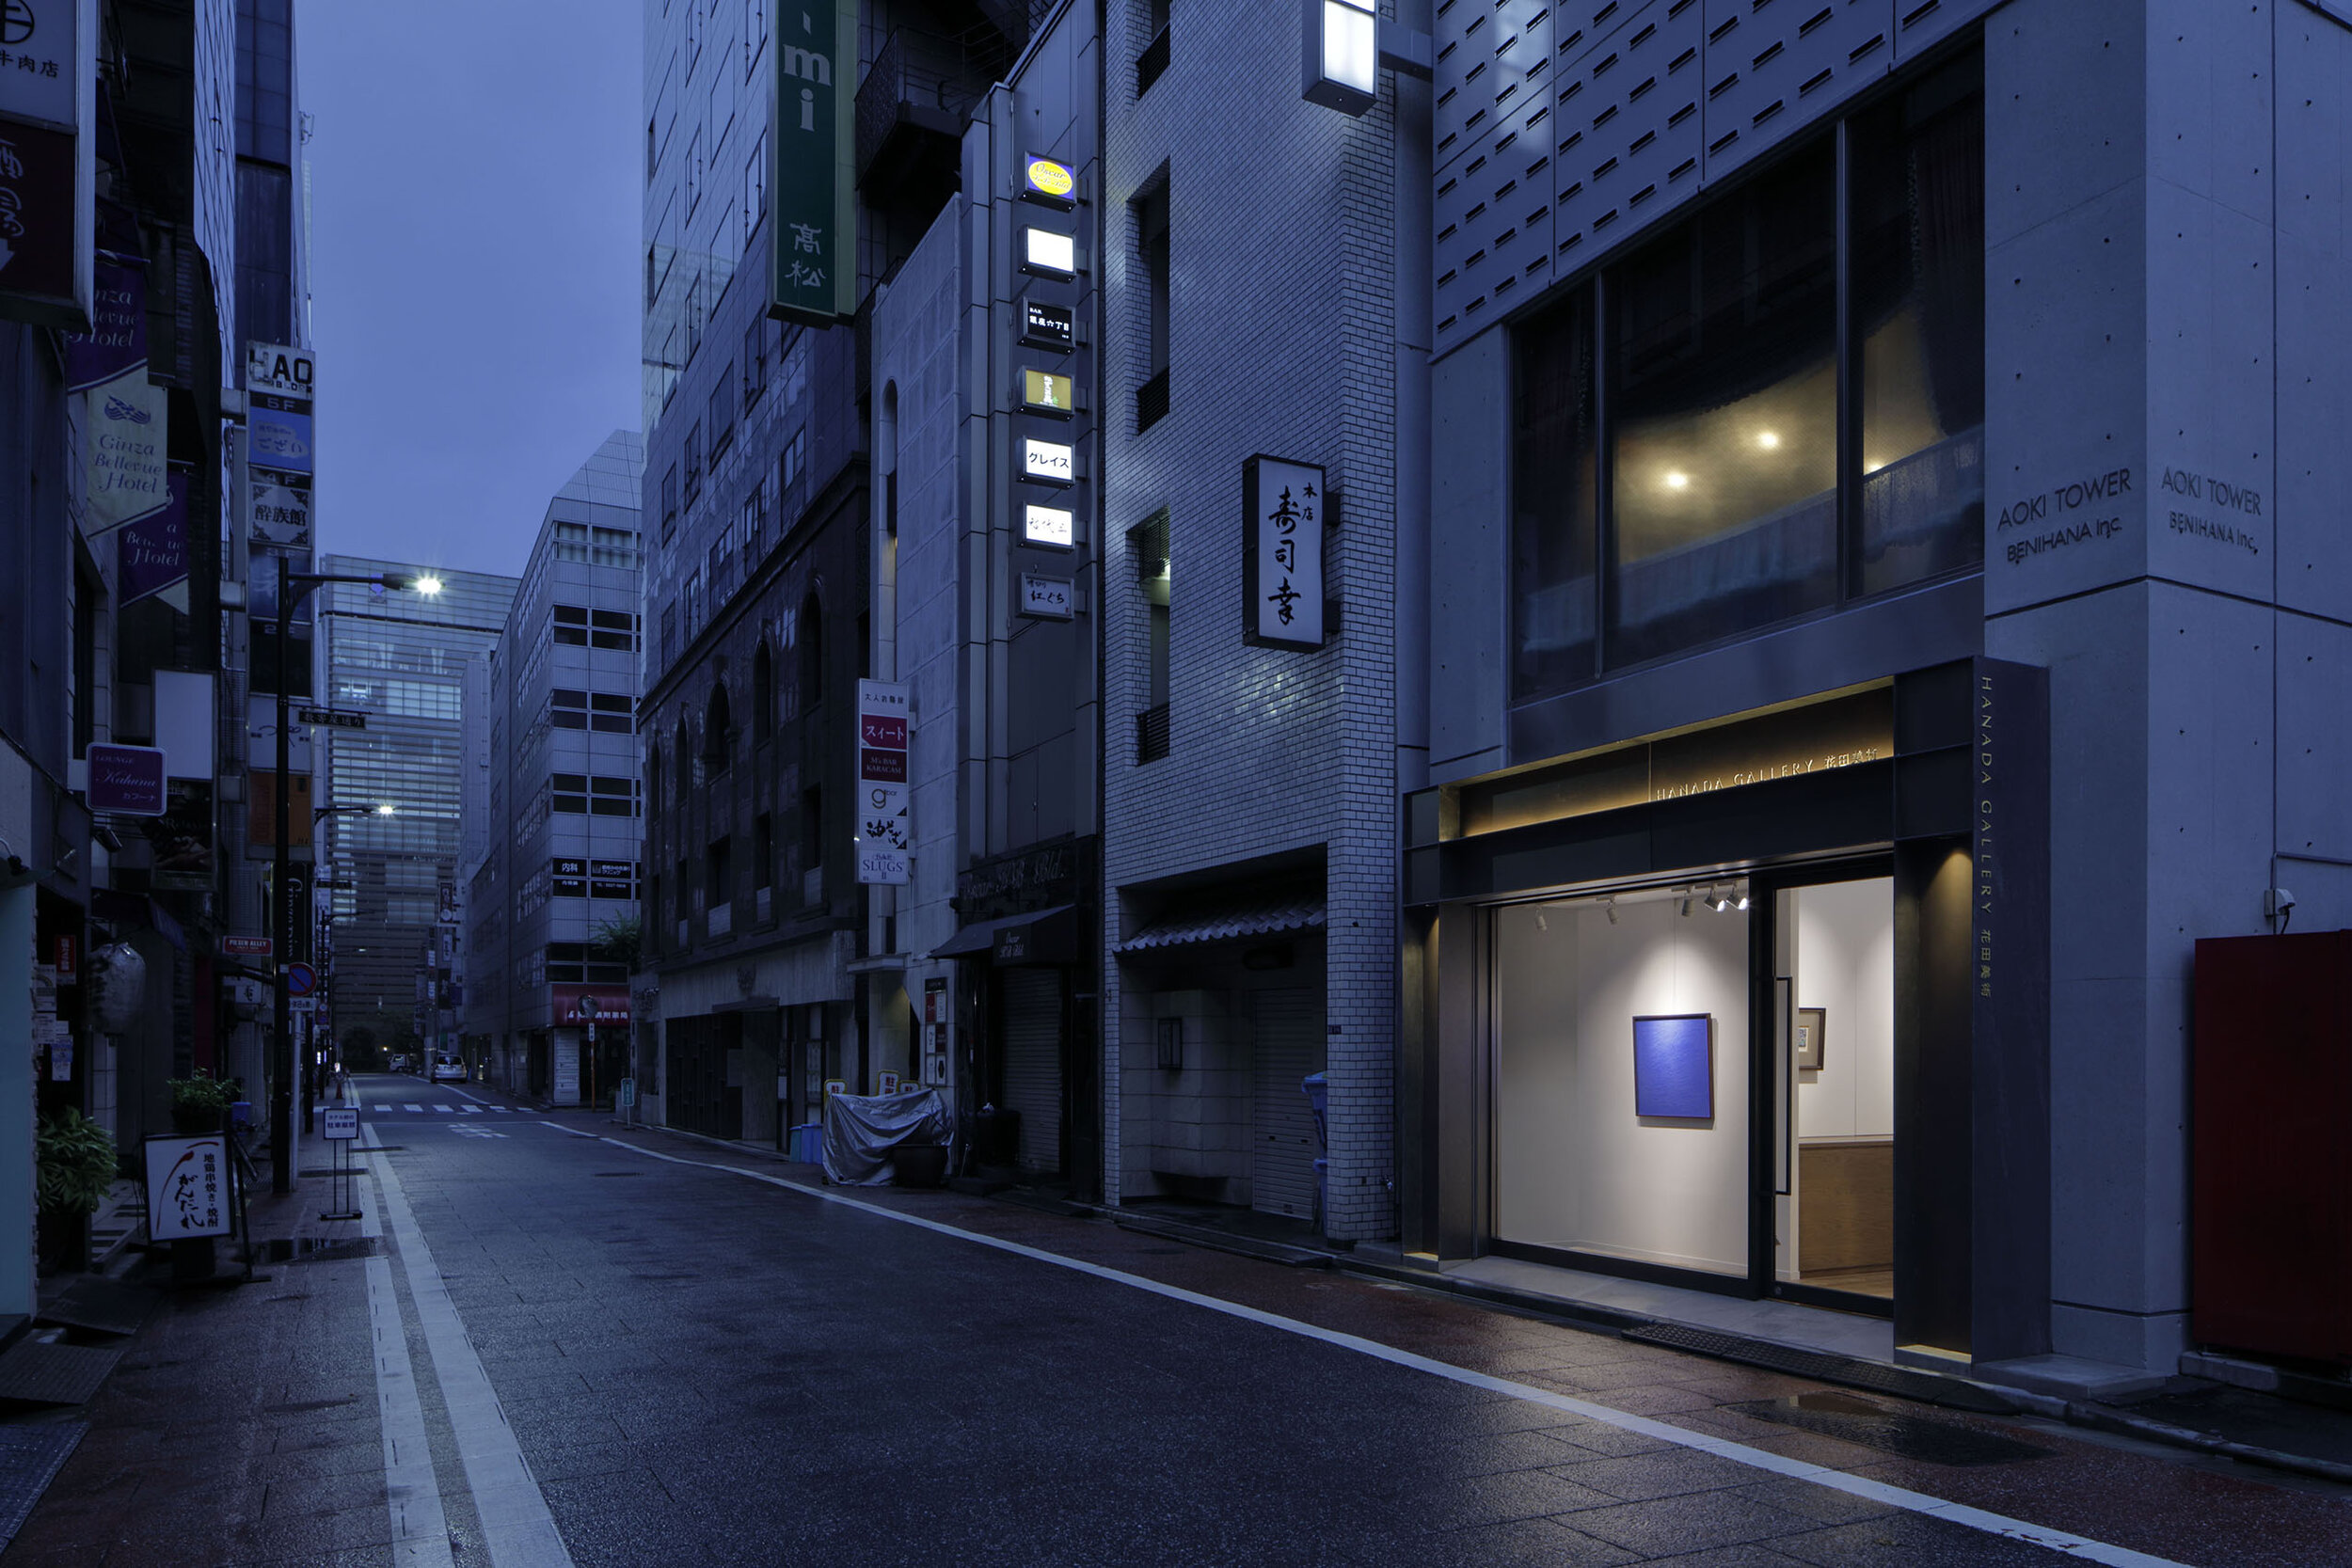  Hanada Gallery Ginza designed by Ryohei Kanda, a director of Tokyo-based design studio Roito 